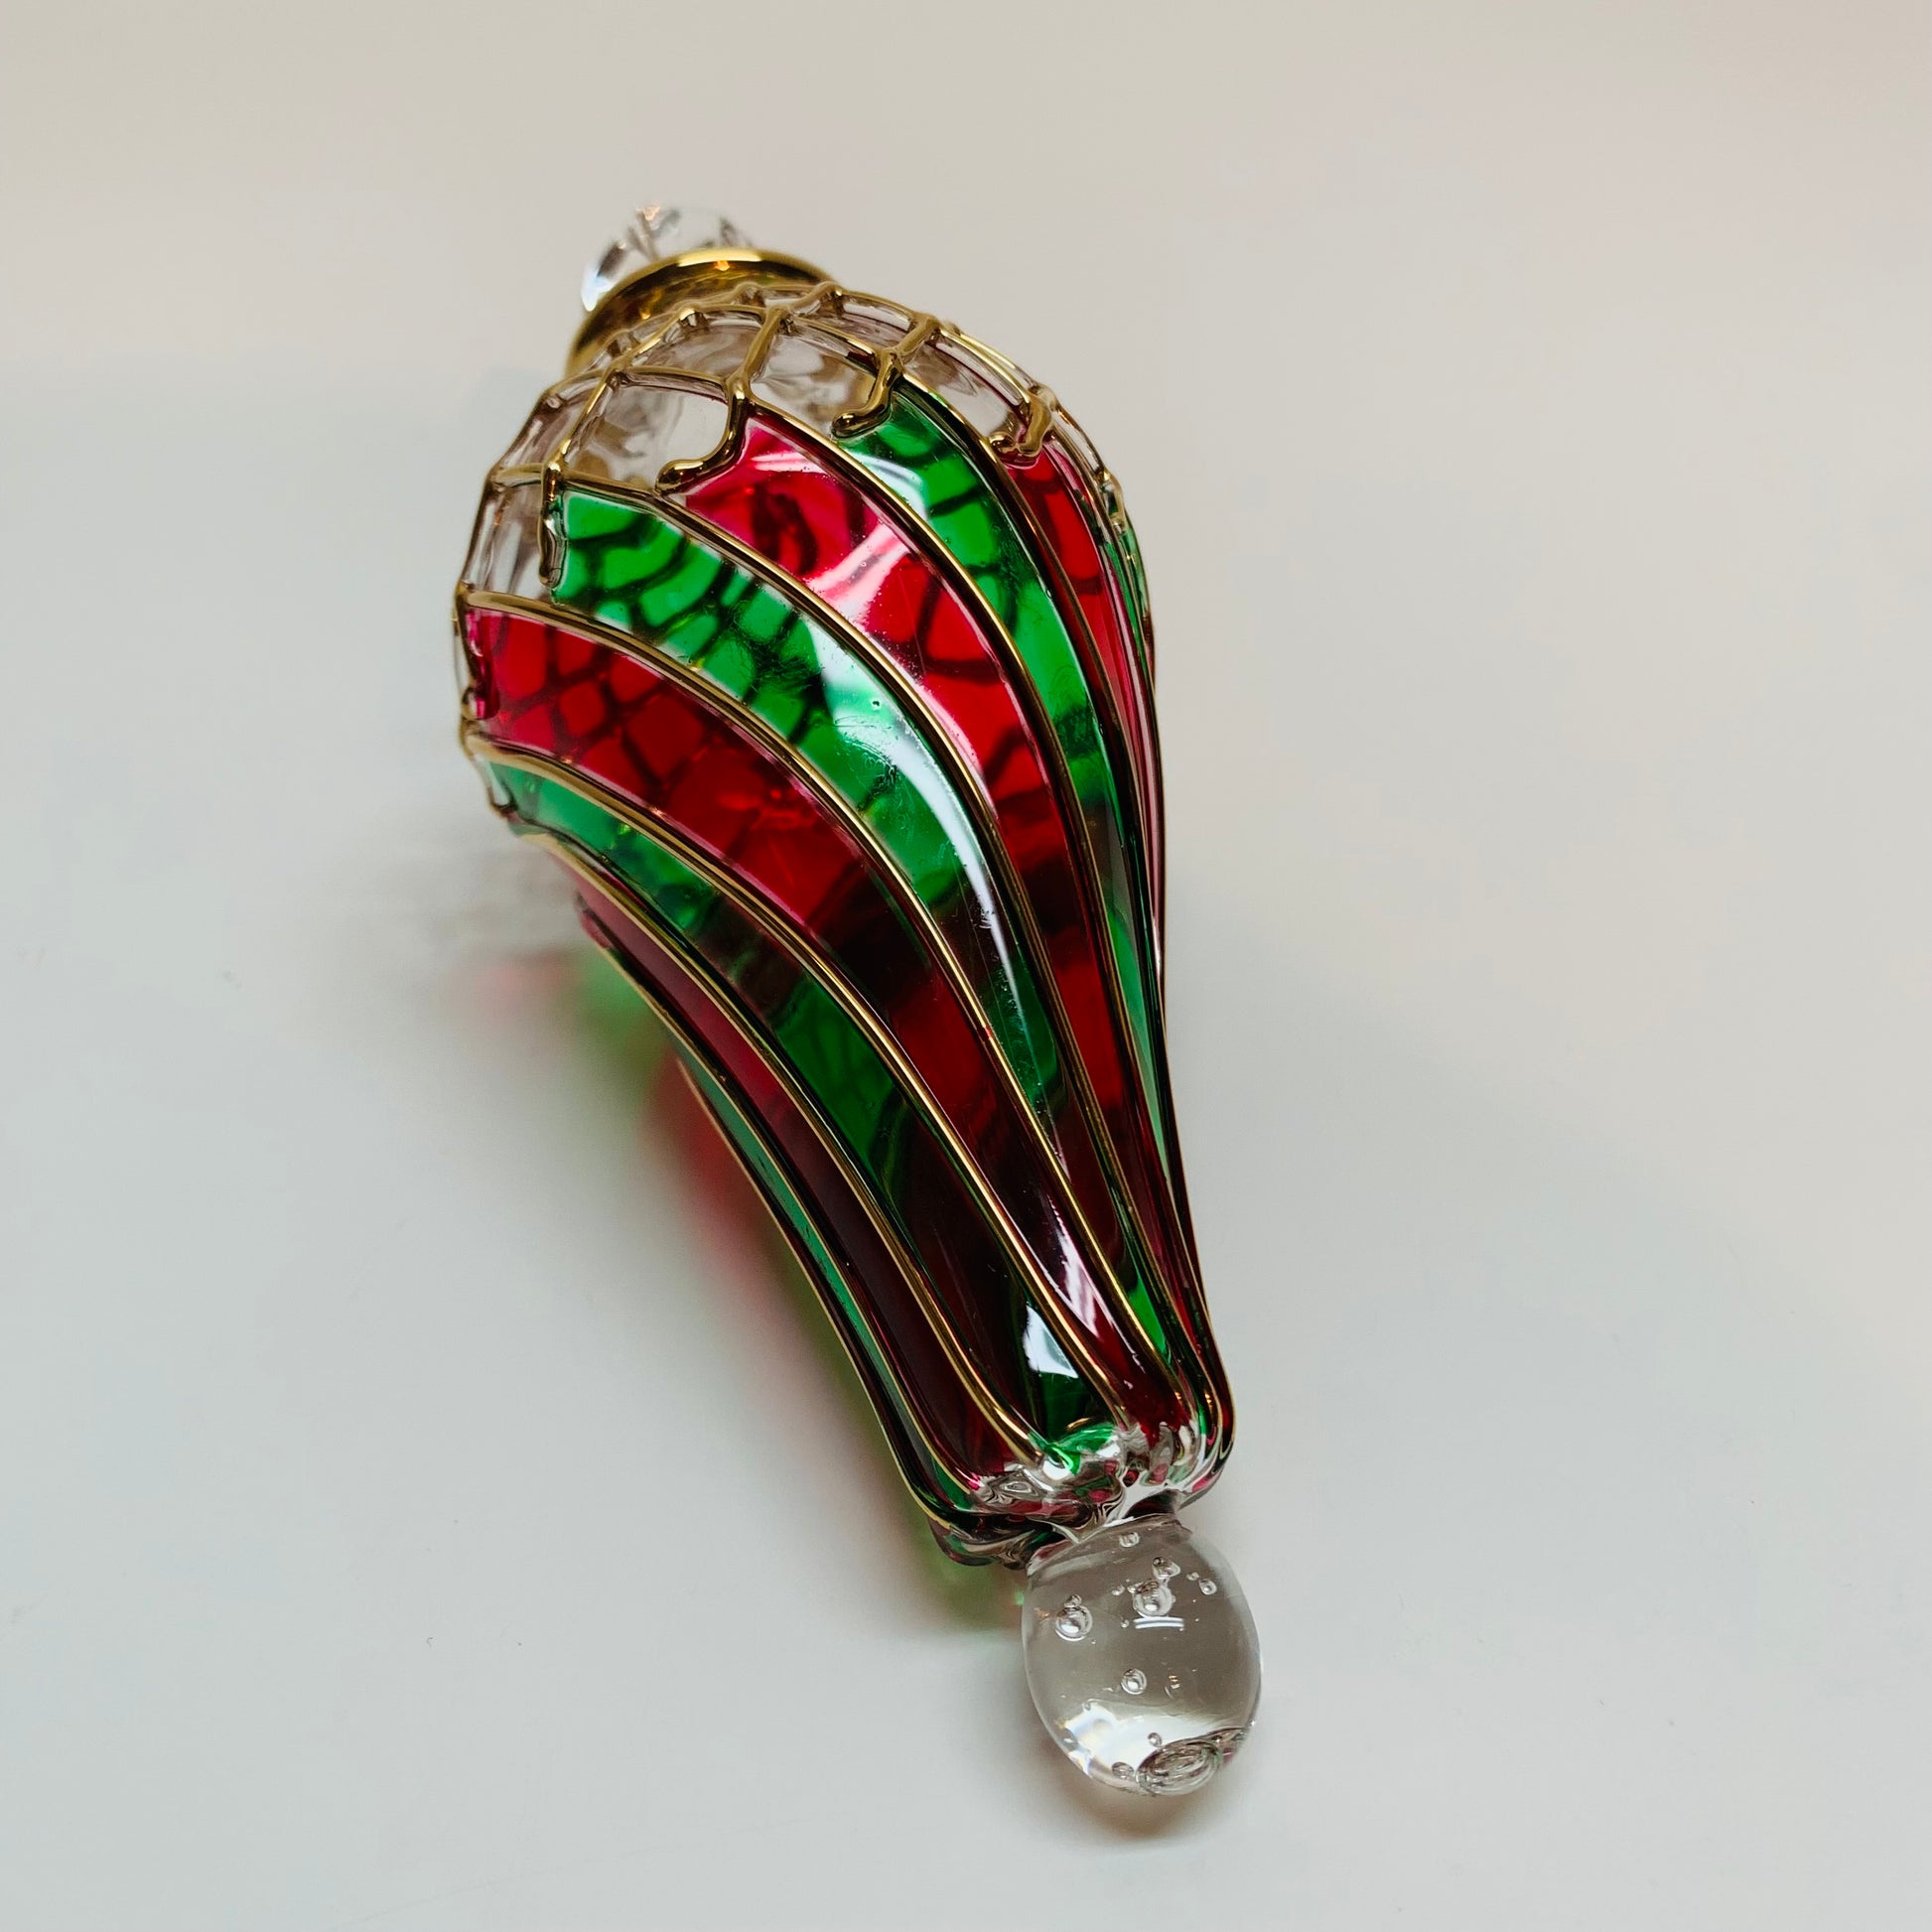 Blown Glass Ornament - Swirl Green & Red